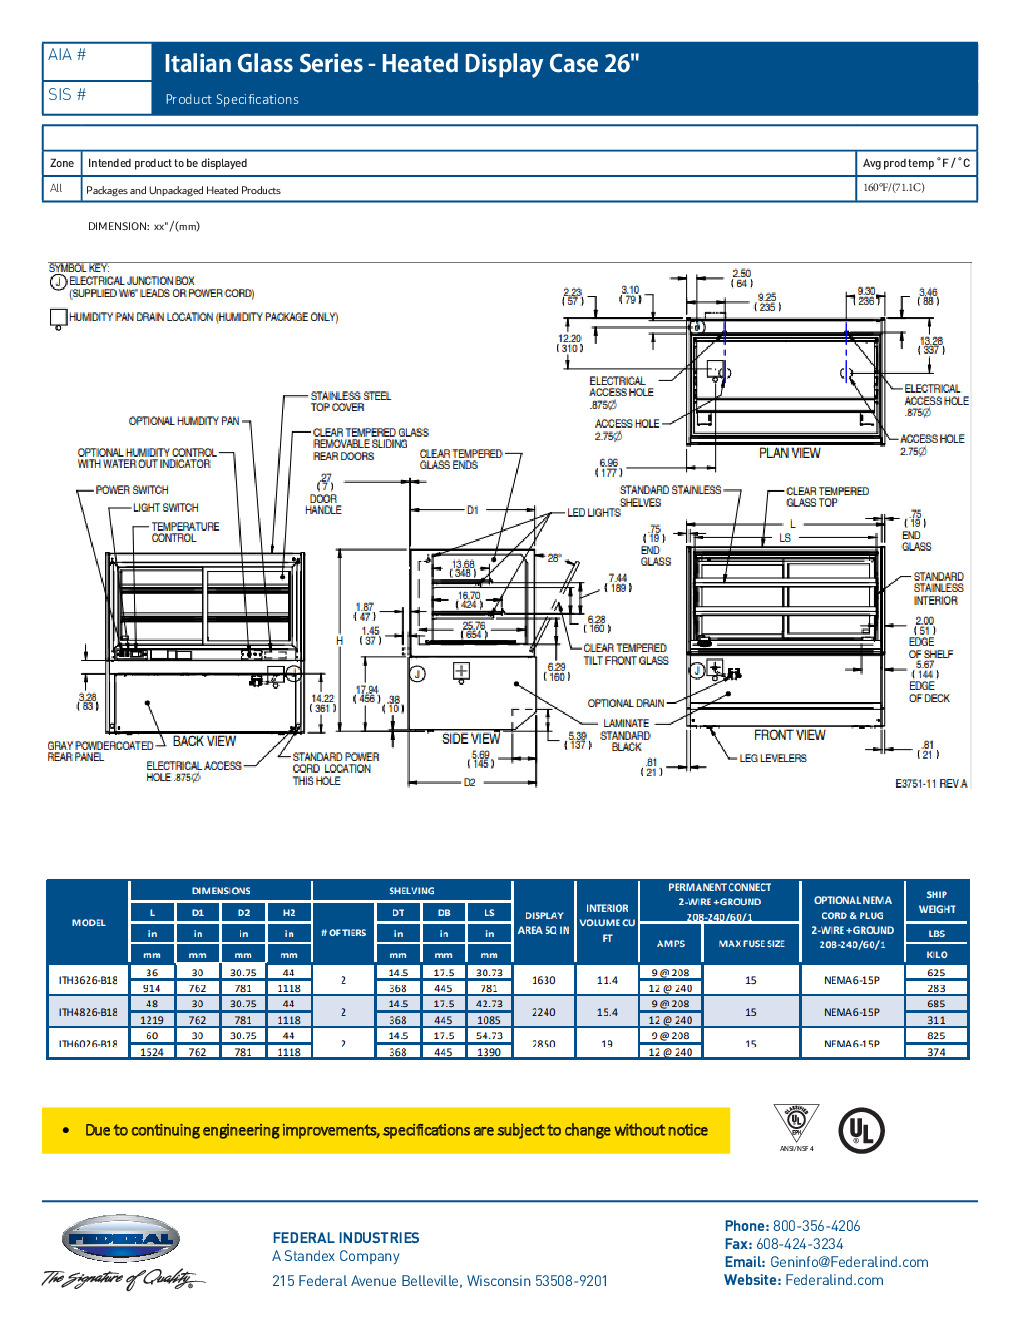 Federal Industries ITH3626-B18 Floor Model Heated Display Case